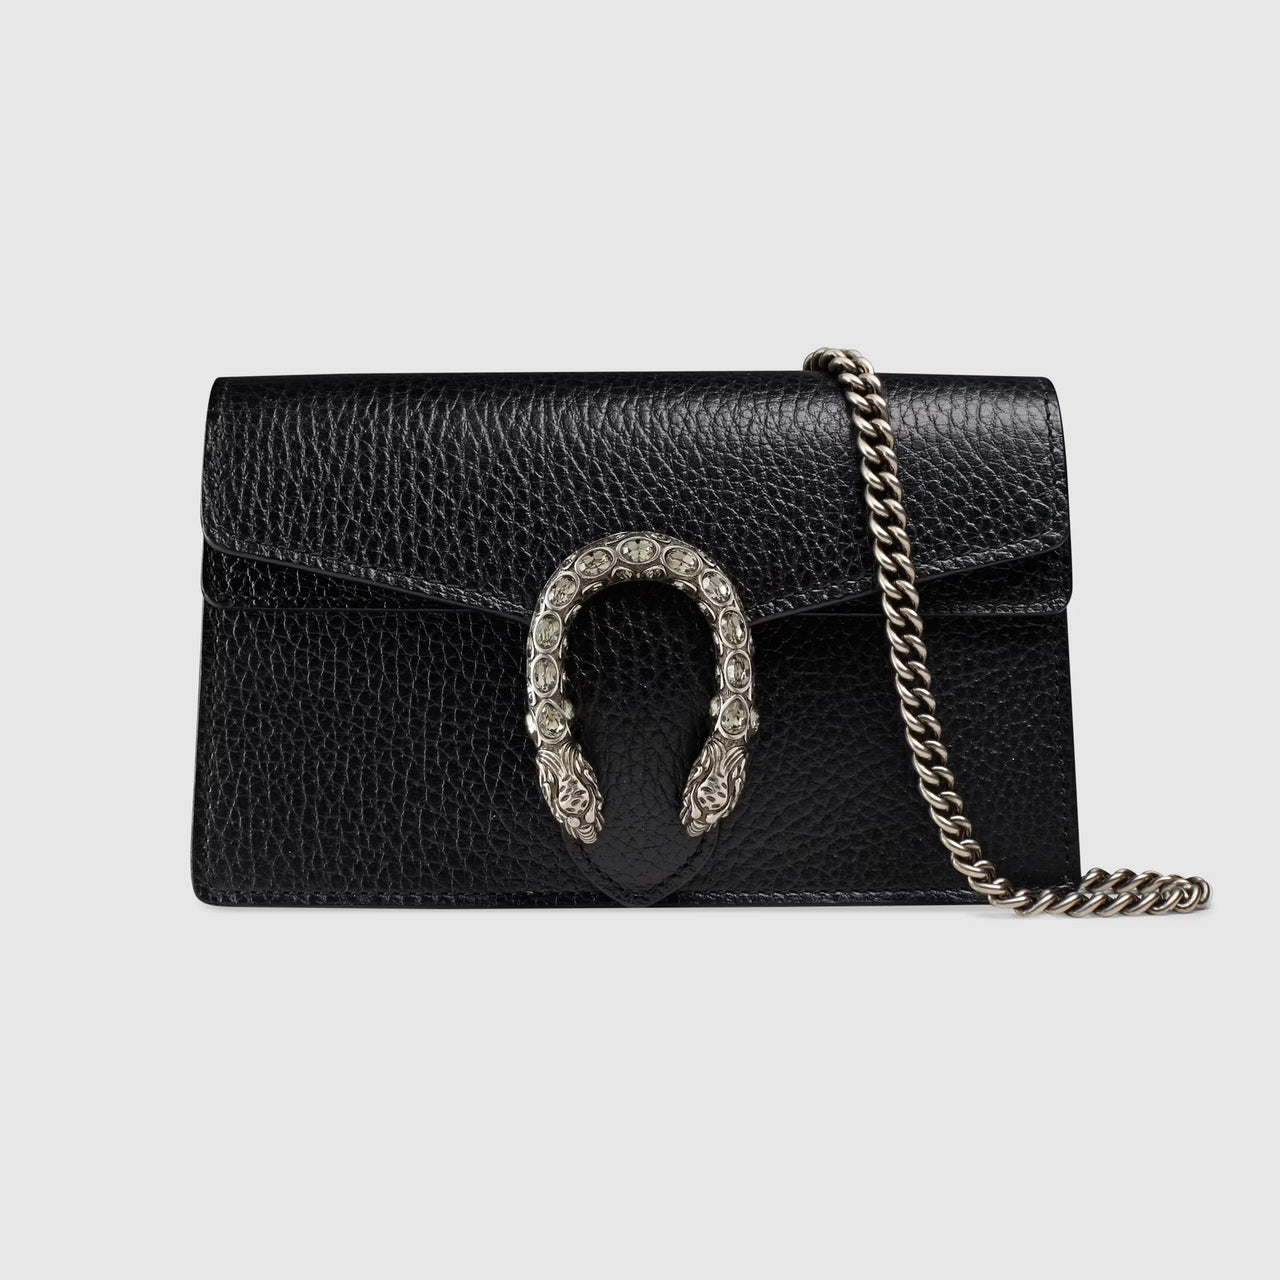 Gucci Dionysus Super Mini Leather Bag (Black Leather)